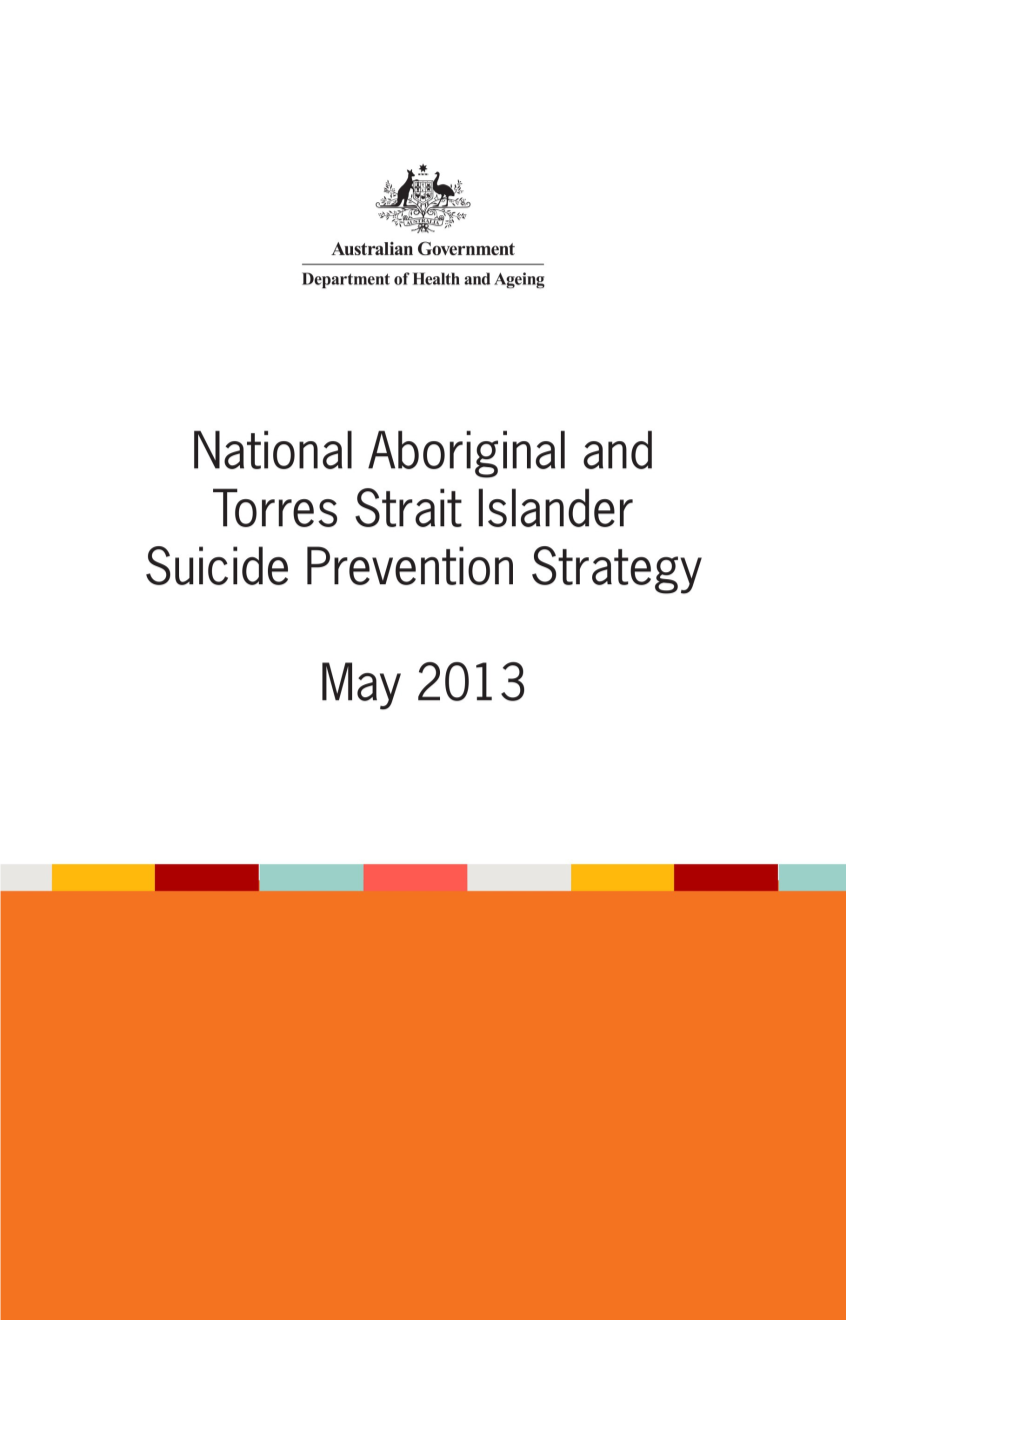 National Aboriginal and Torres Strait Islander Suicide Prevention Strategy: Consultation Paper